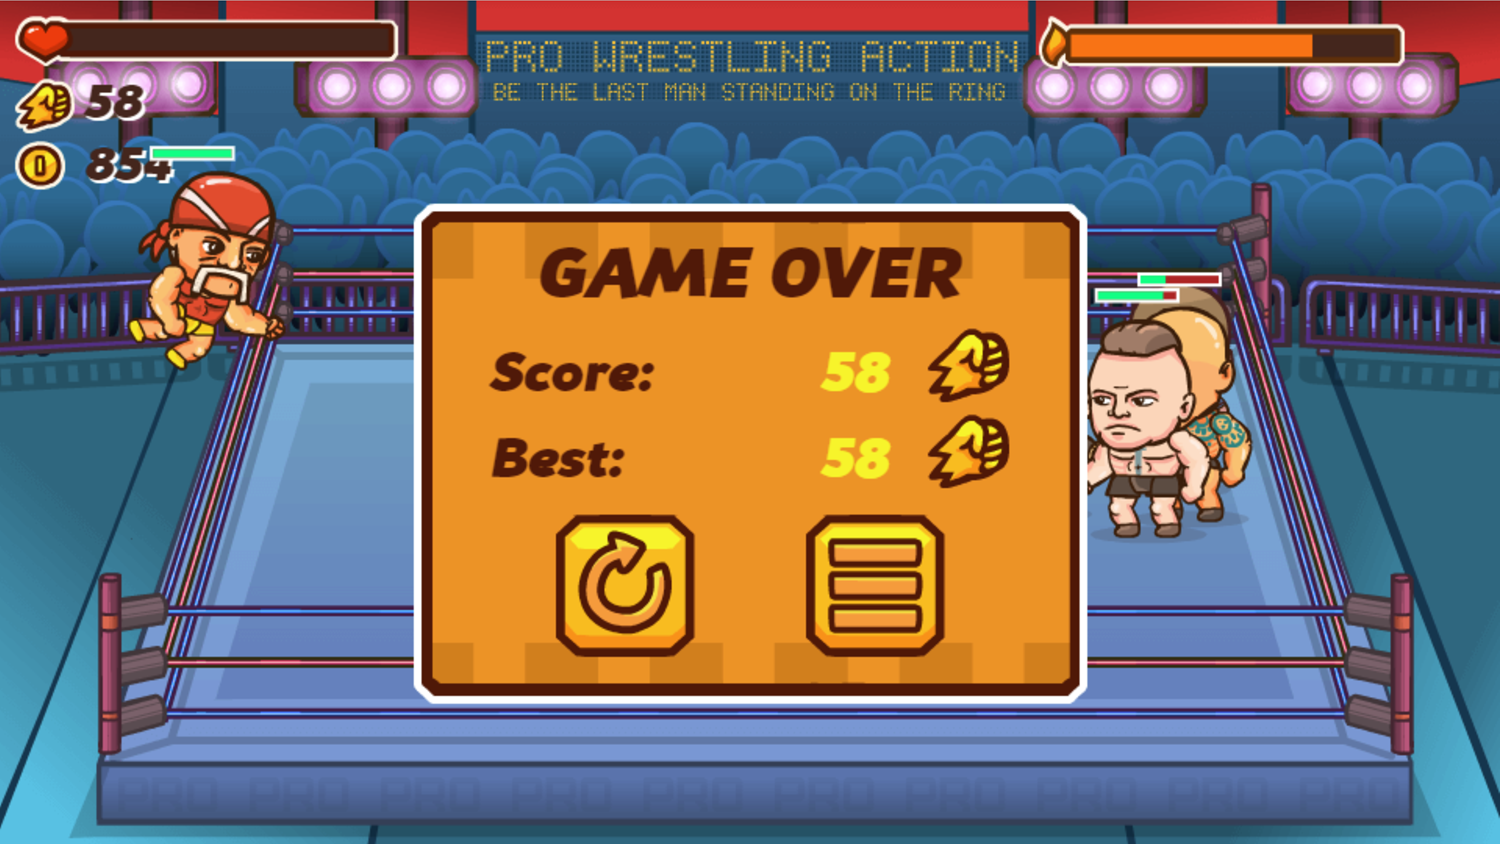 Pro Wrestling Action Game Over Screen Screenshot.